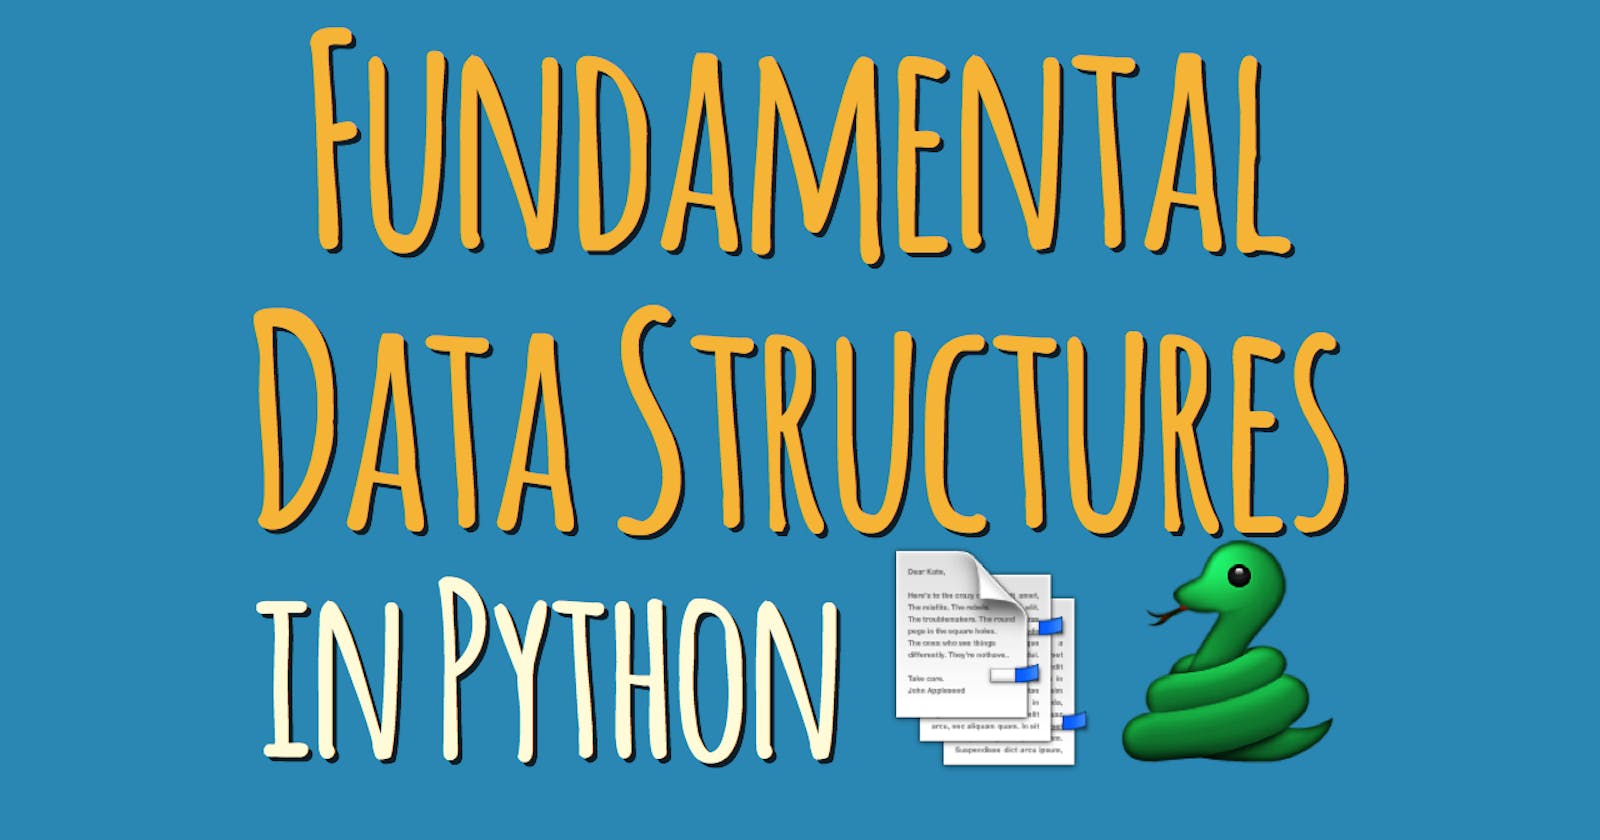 Python Data Structure- Part 1